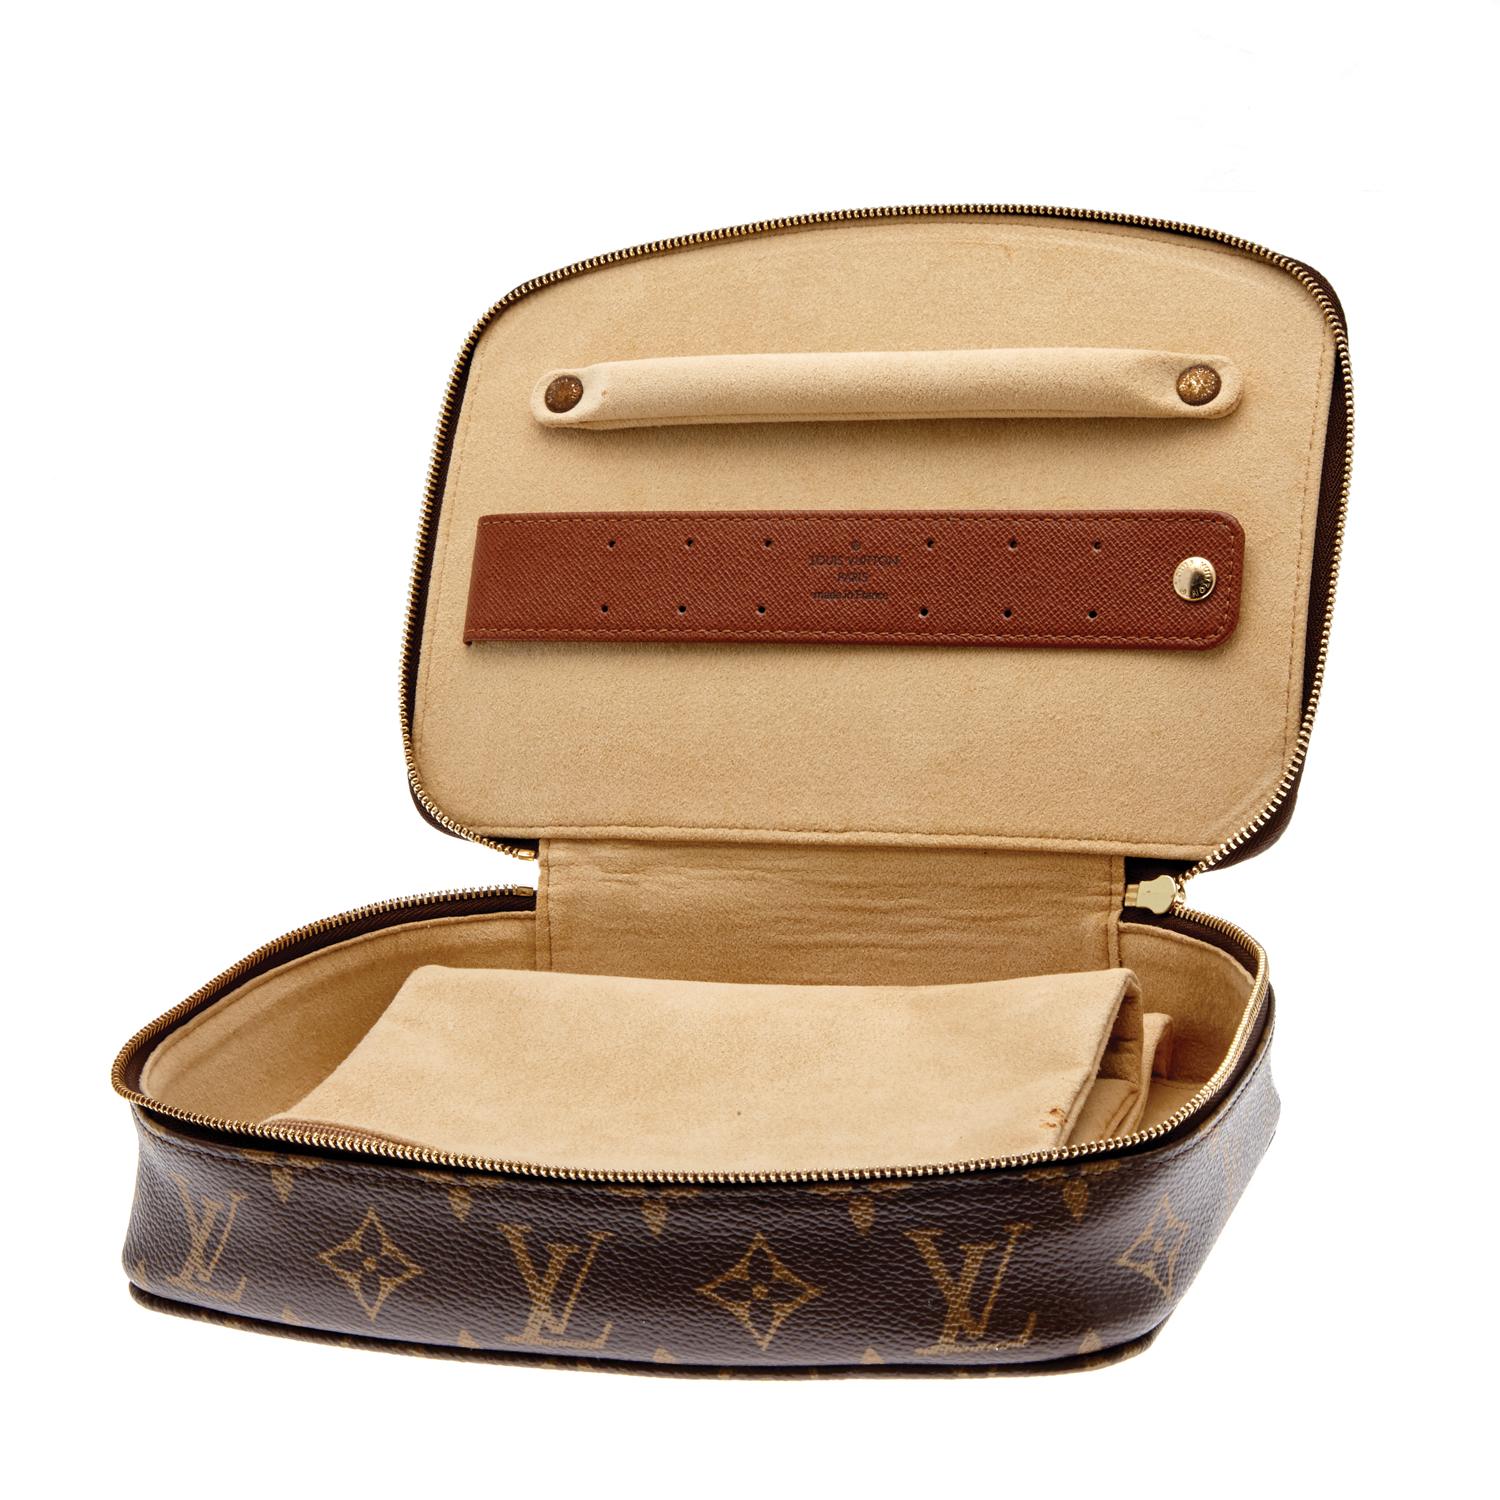 Sold at Auction: Louis Vuitton, Louis Vuitton Leather Monte Carlo